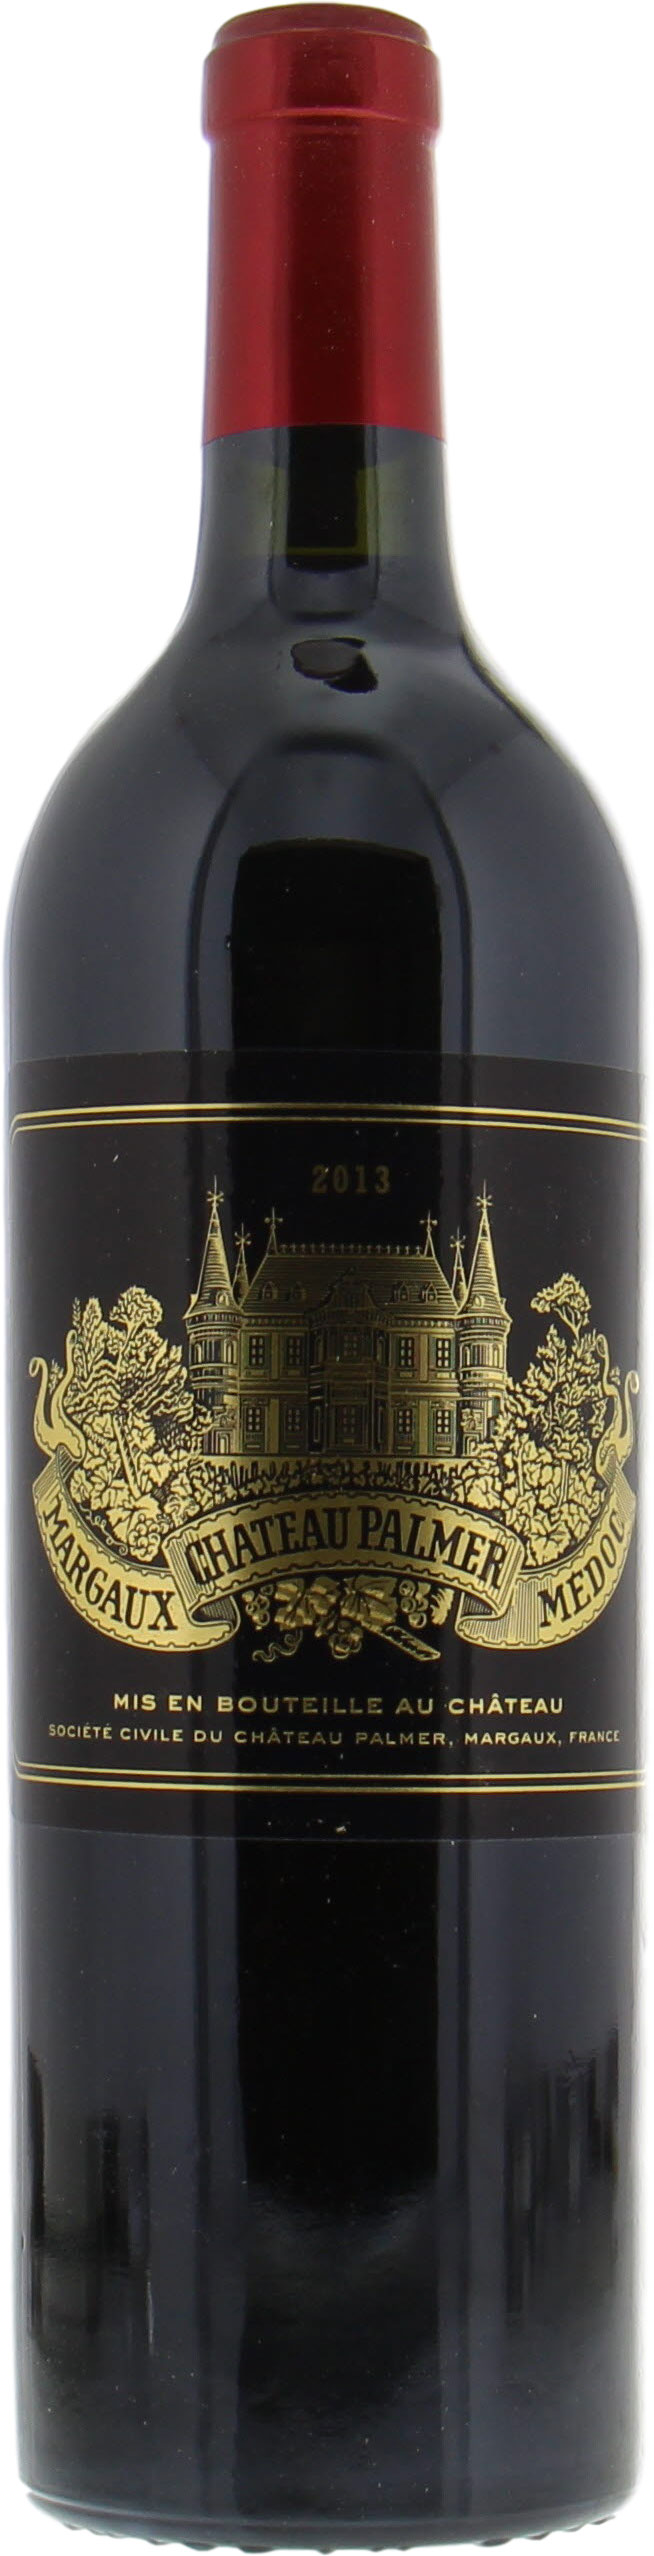 Chateau Palmer - Chateau Palmer 2013